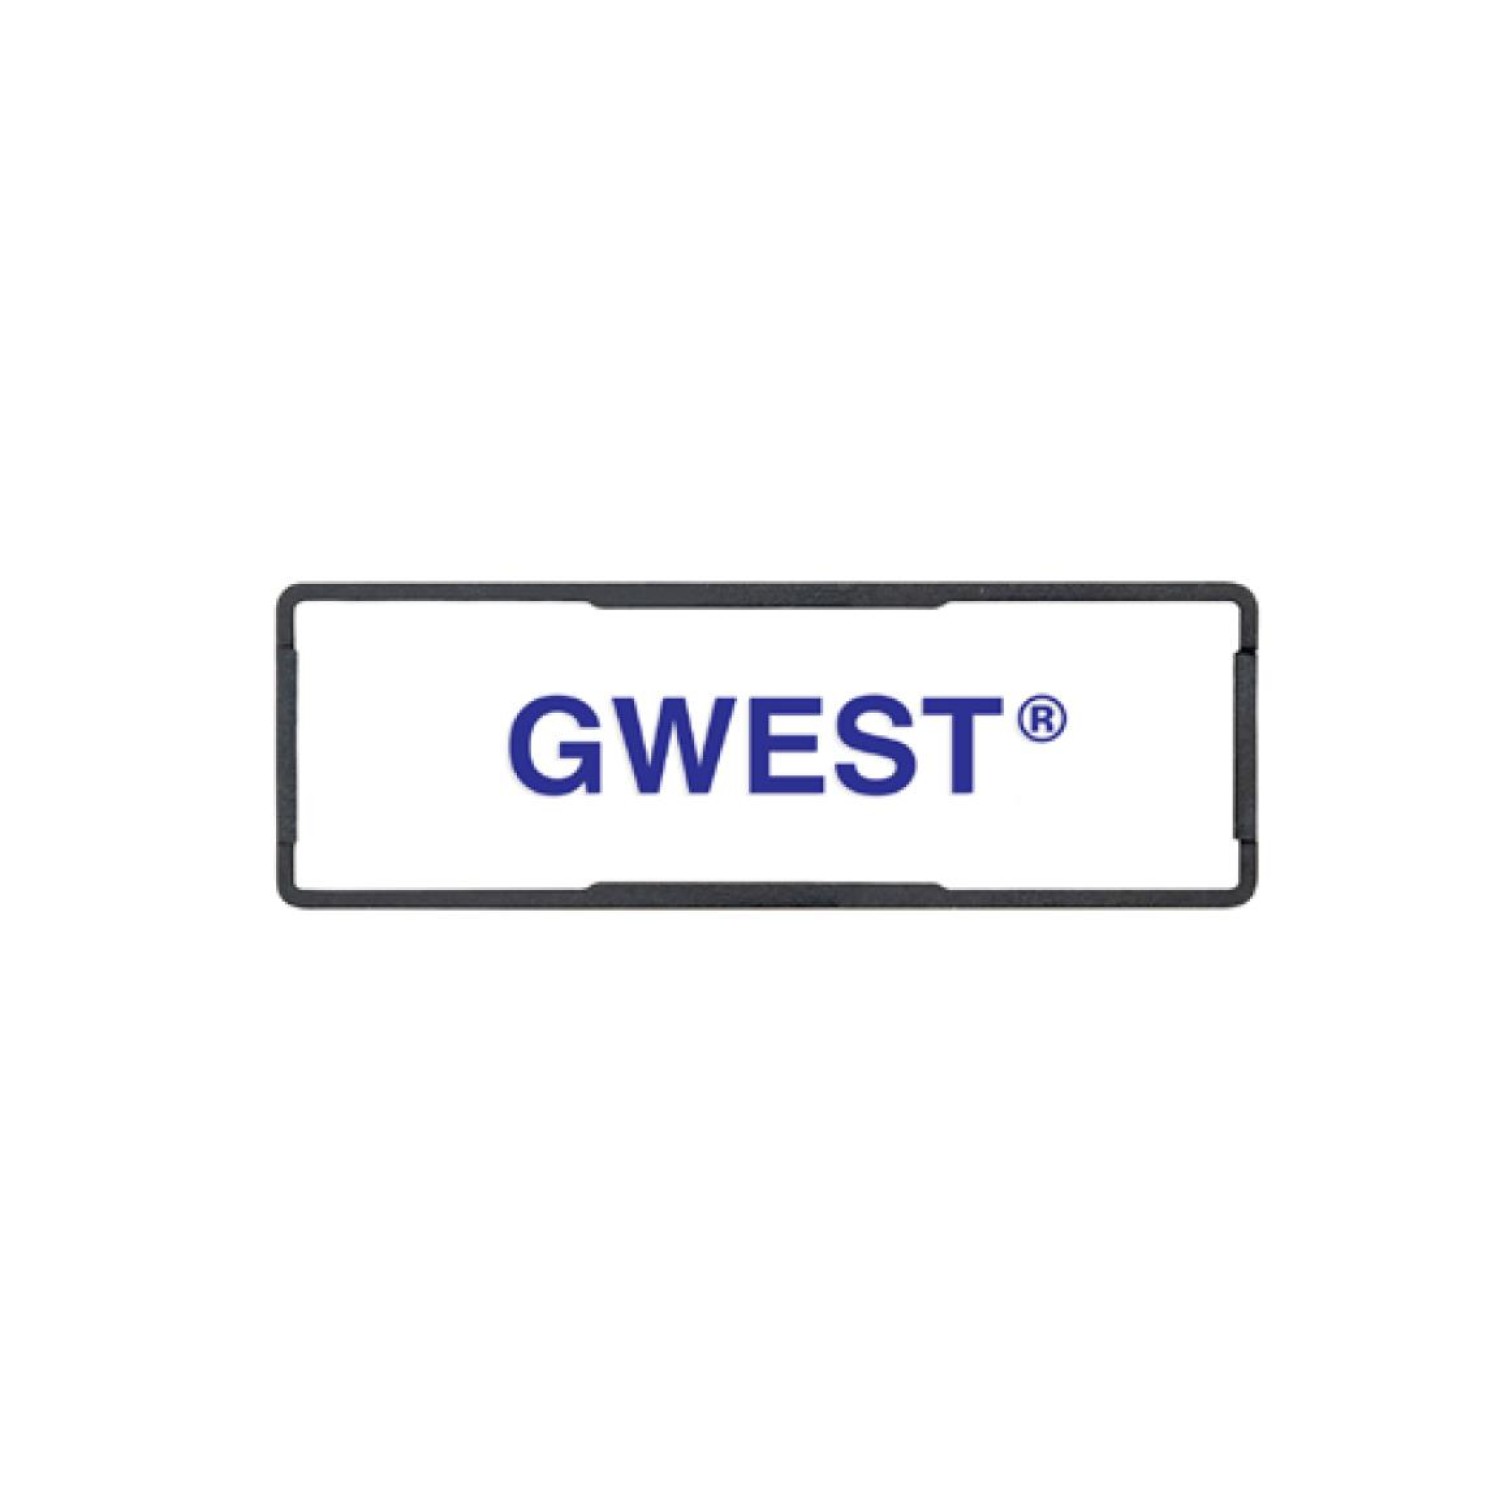 Gwest Pano Etiketi - GPET 2 - 50 Adet